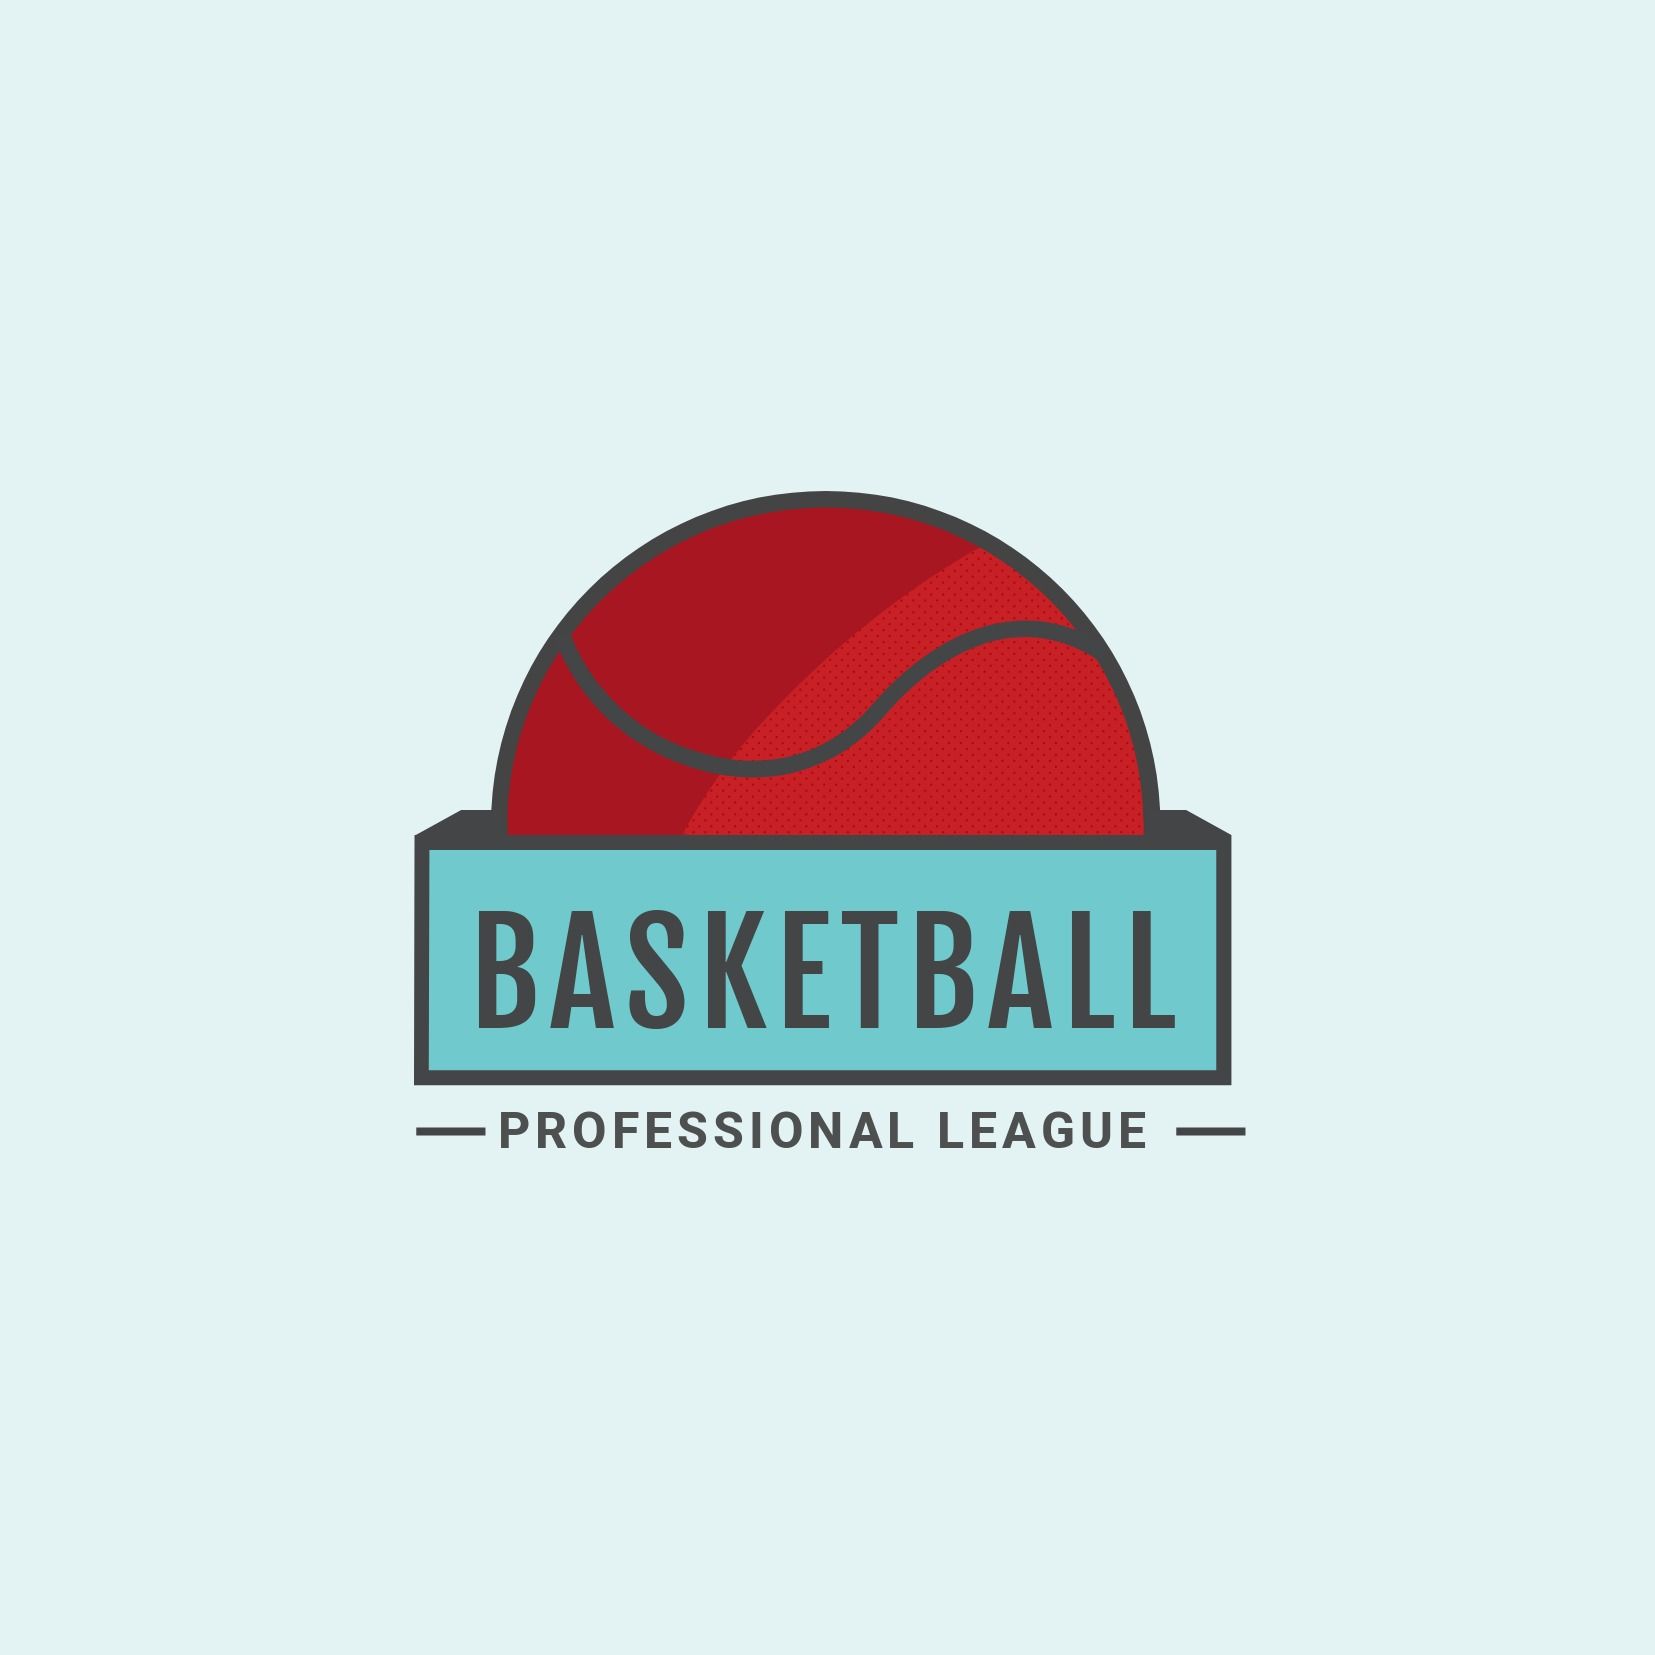 Kreative Designs für Basketball-Logos